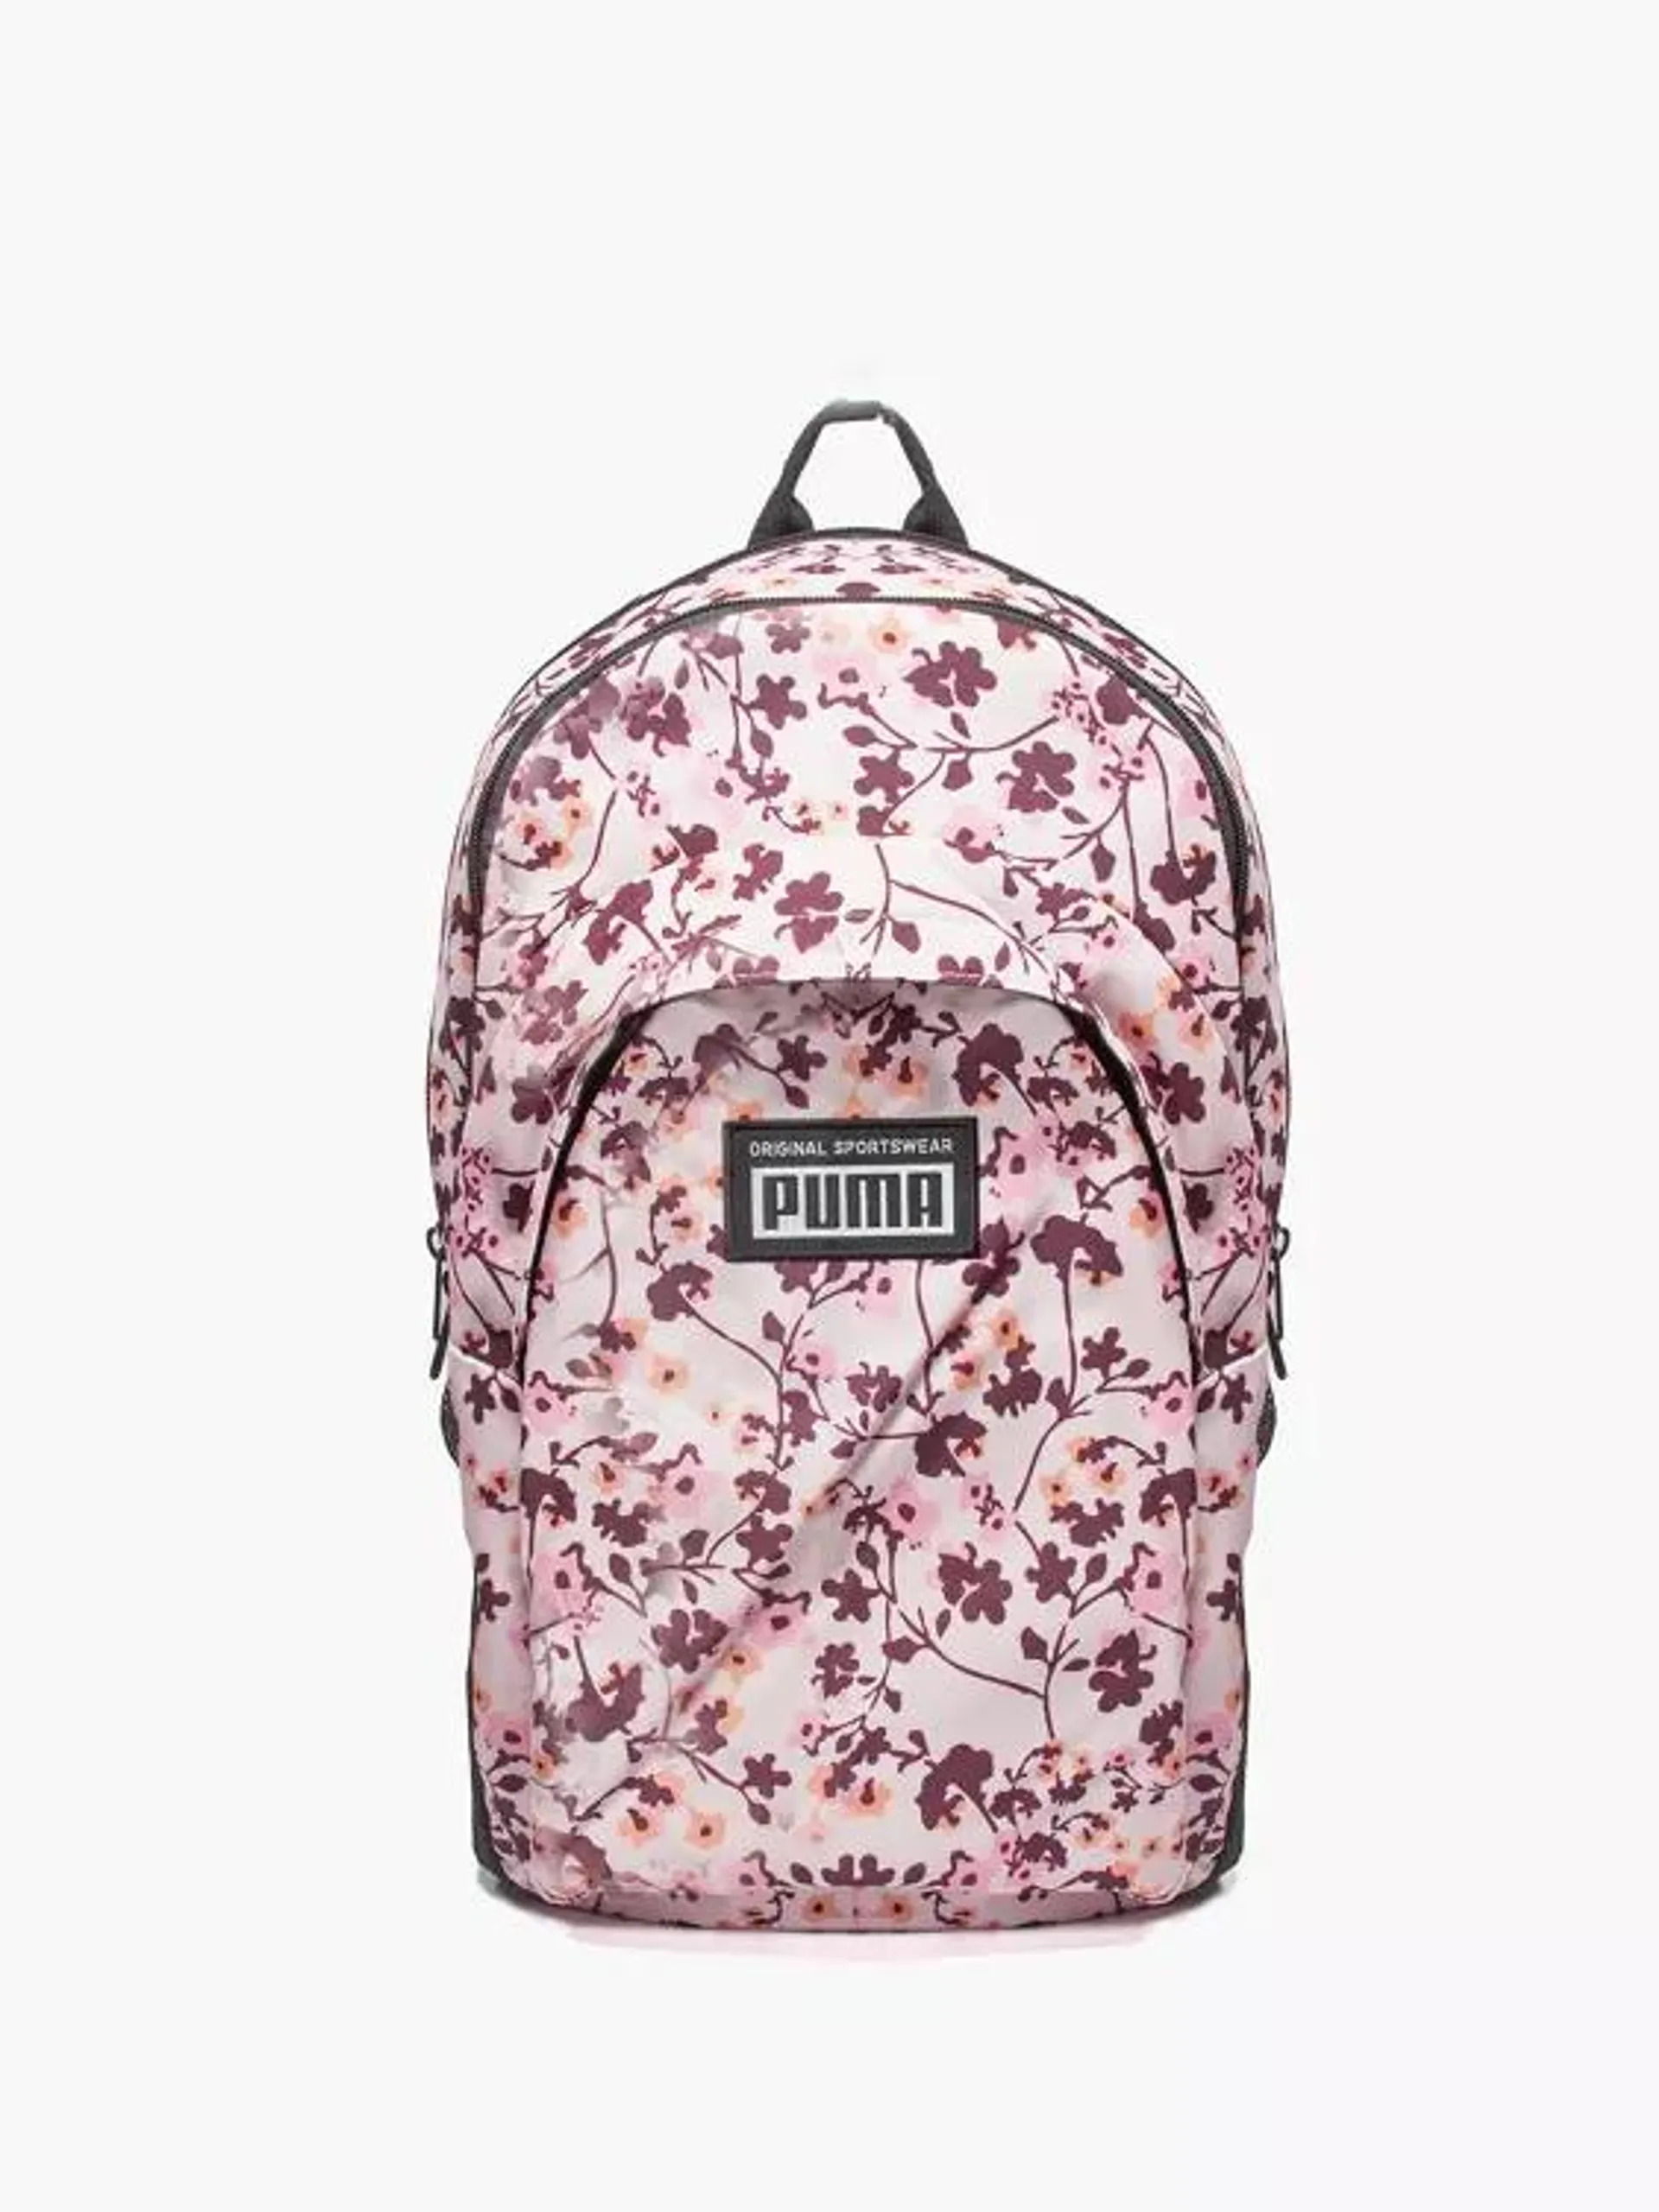 Puma Acadamy Floral Backpack